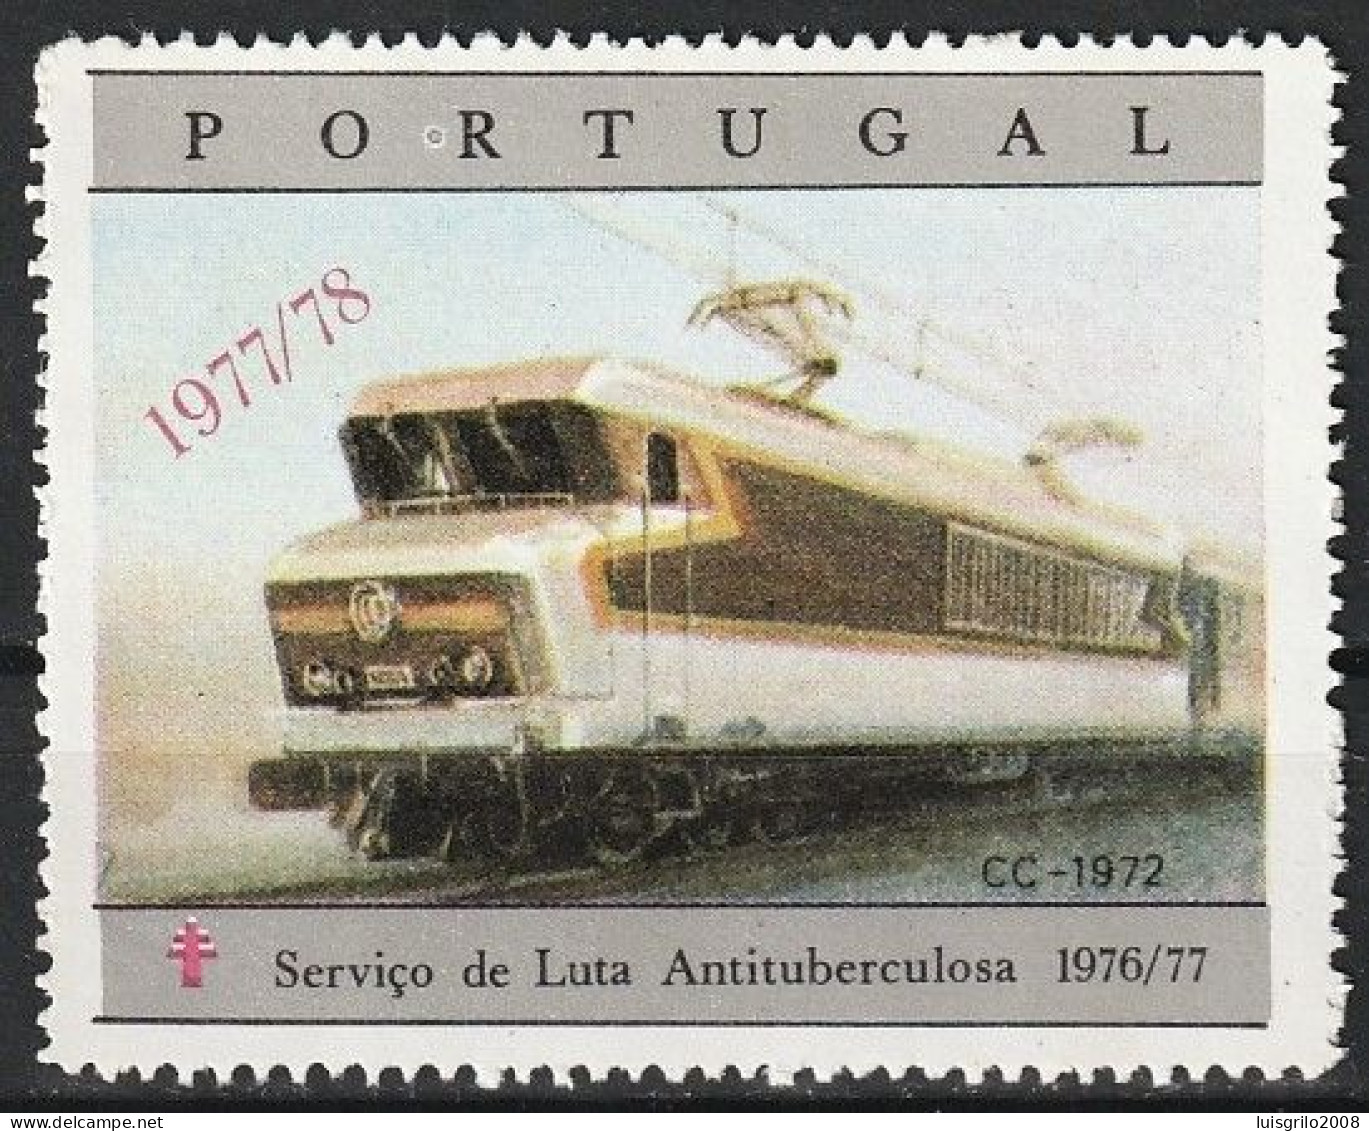 Portugal, Vignettes/ Vinhetas Tuberculosos - Comboios/ Trains > Luta Antituberculosa -|- MNH - Surcharge 1977/ 78 - Local Post Stamps